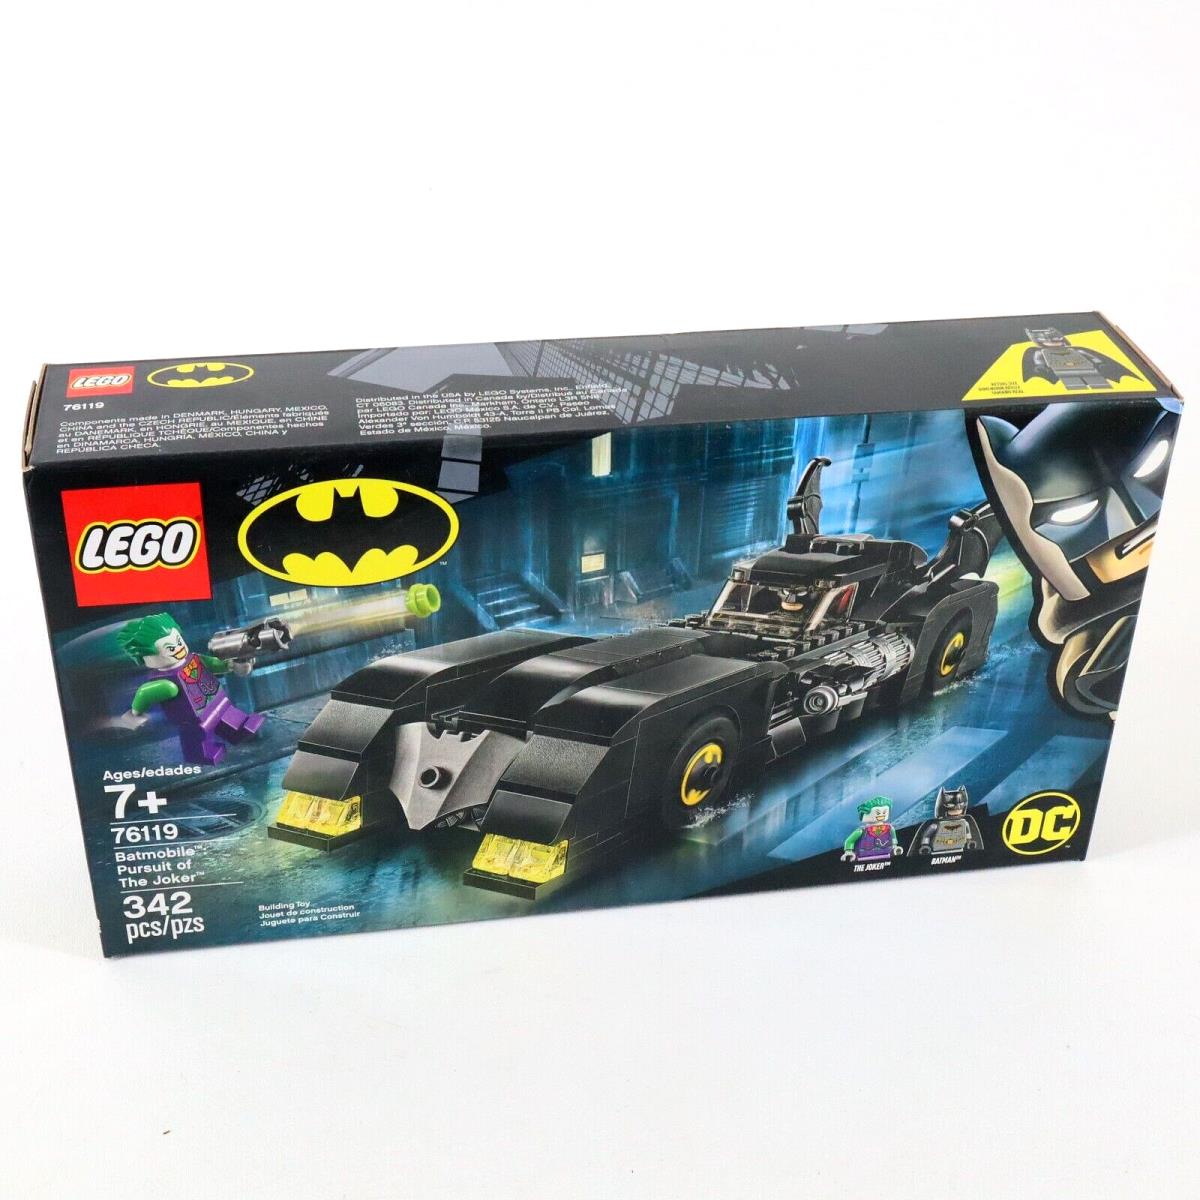 Lego 76119 Batmobile Pursuit of The Joker DC Comics 342pcs